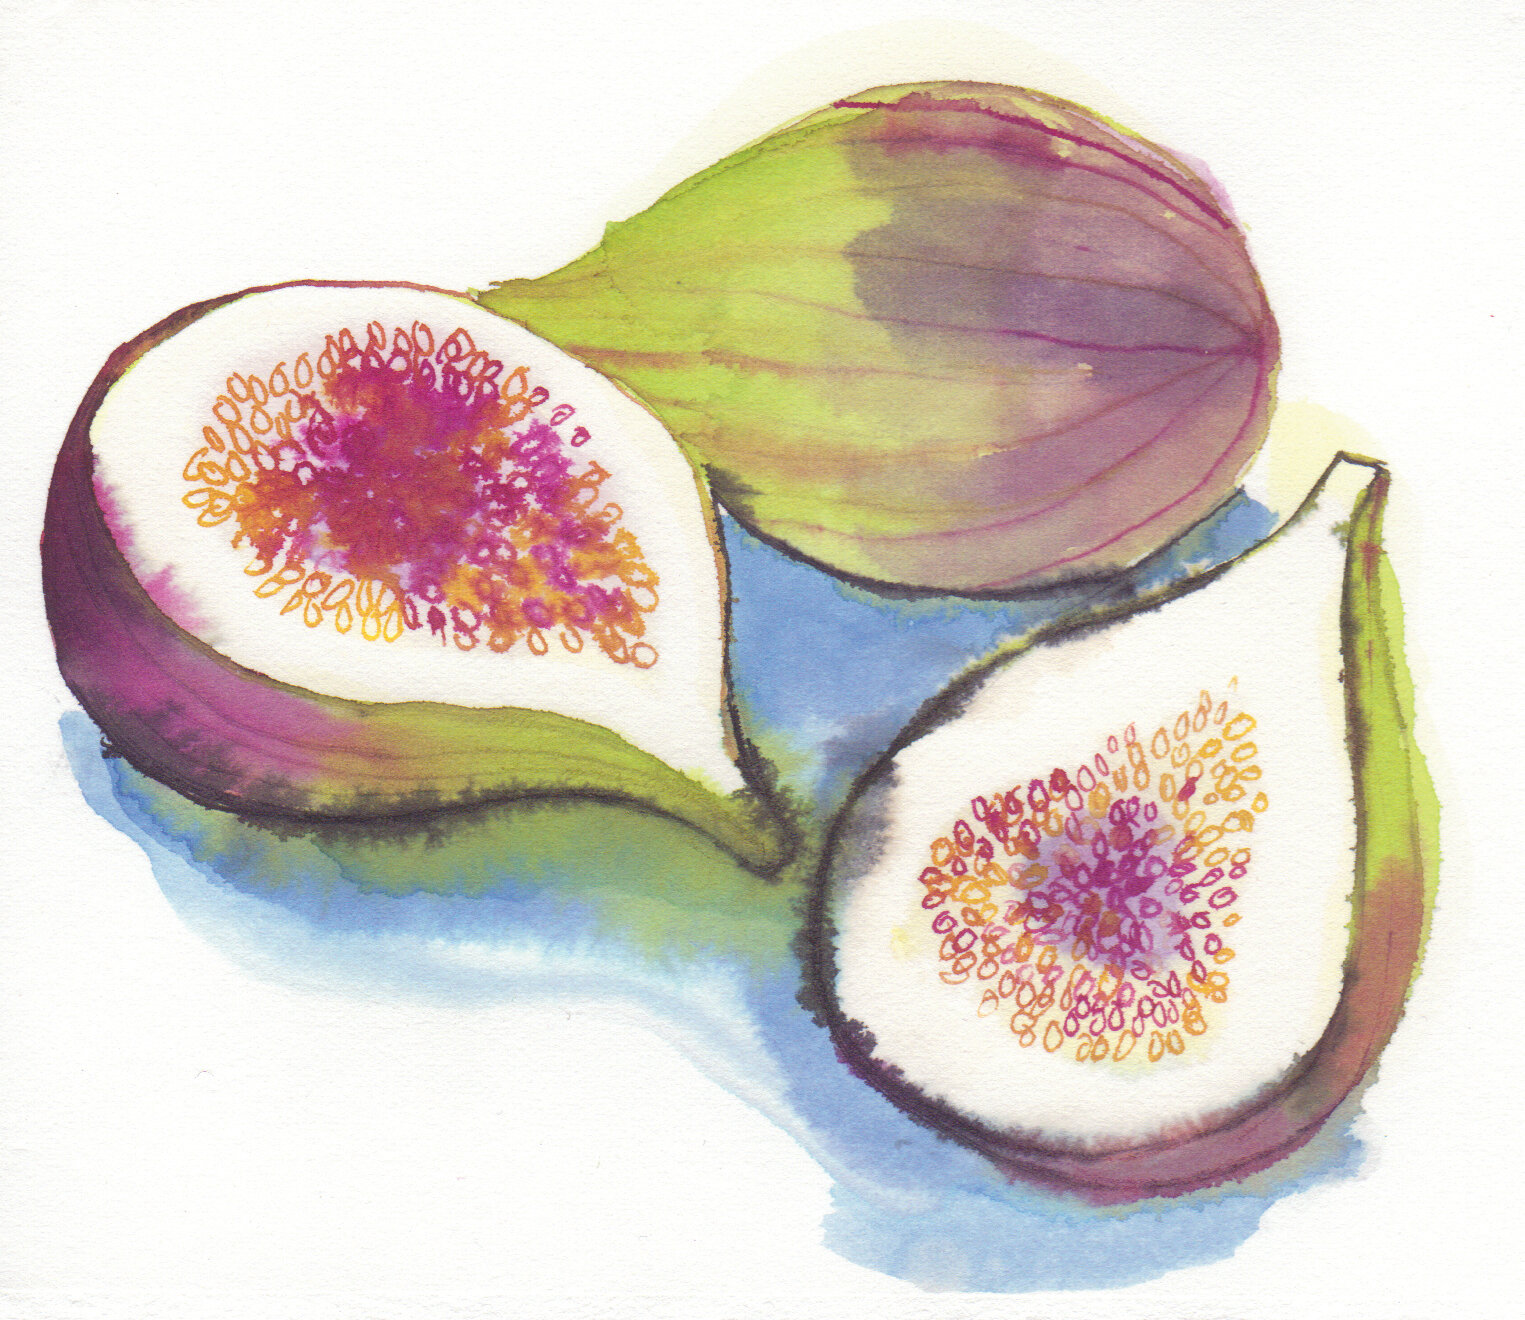 Figs | Chåtelaine Magazine 